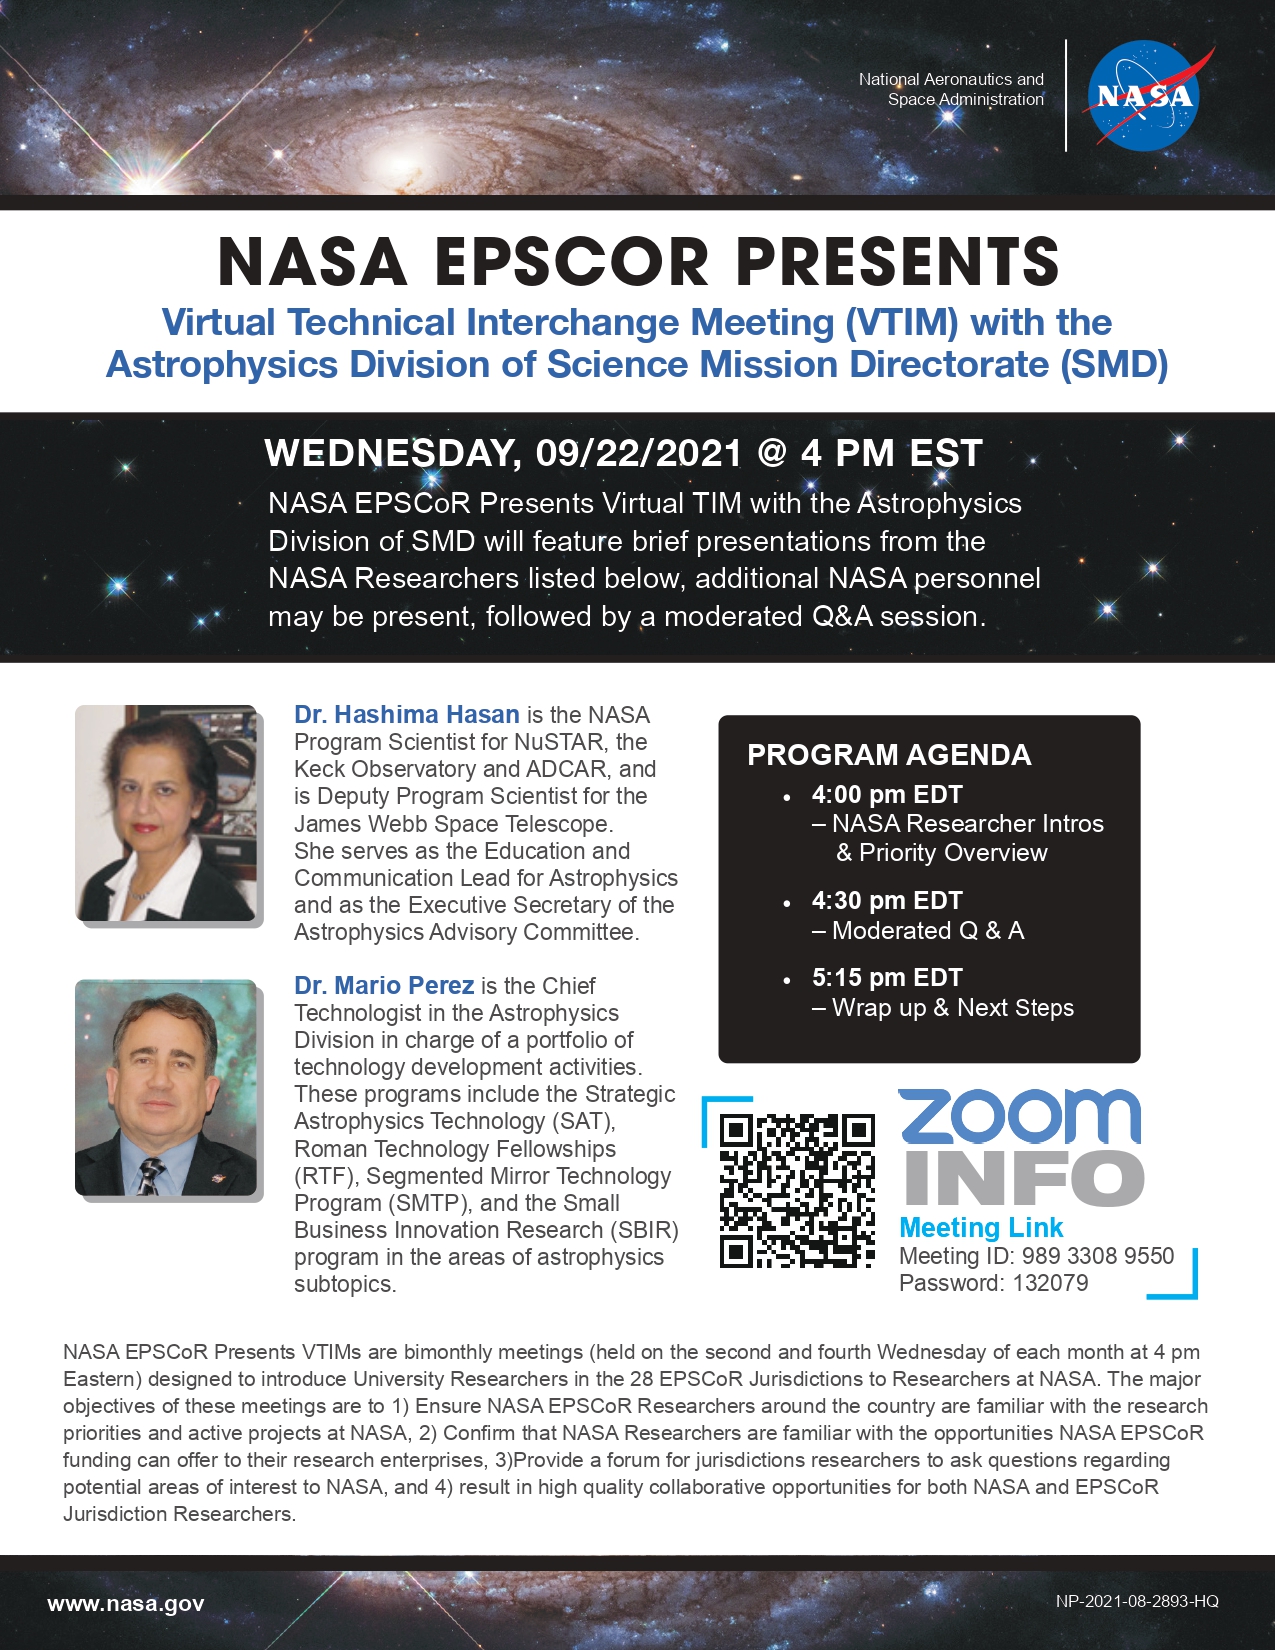 NASA EPSCoR presents virtual technical interchange meeting with NASA Astrophysics Division of Science